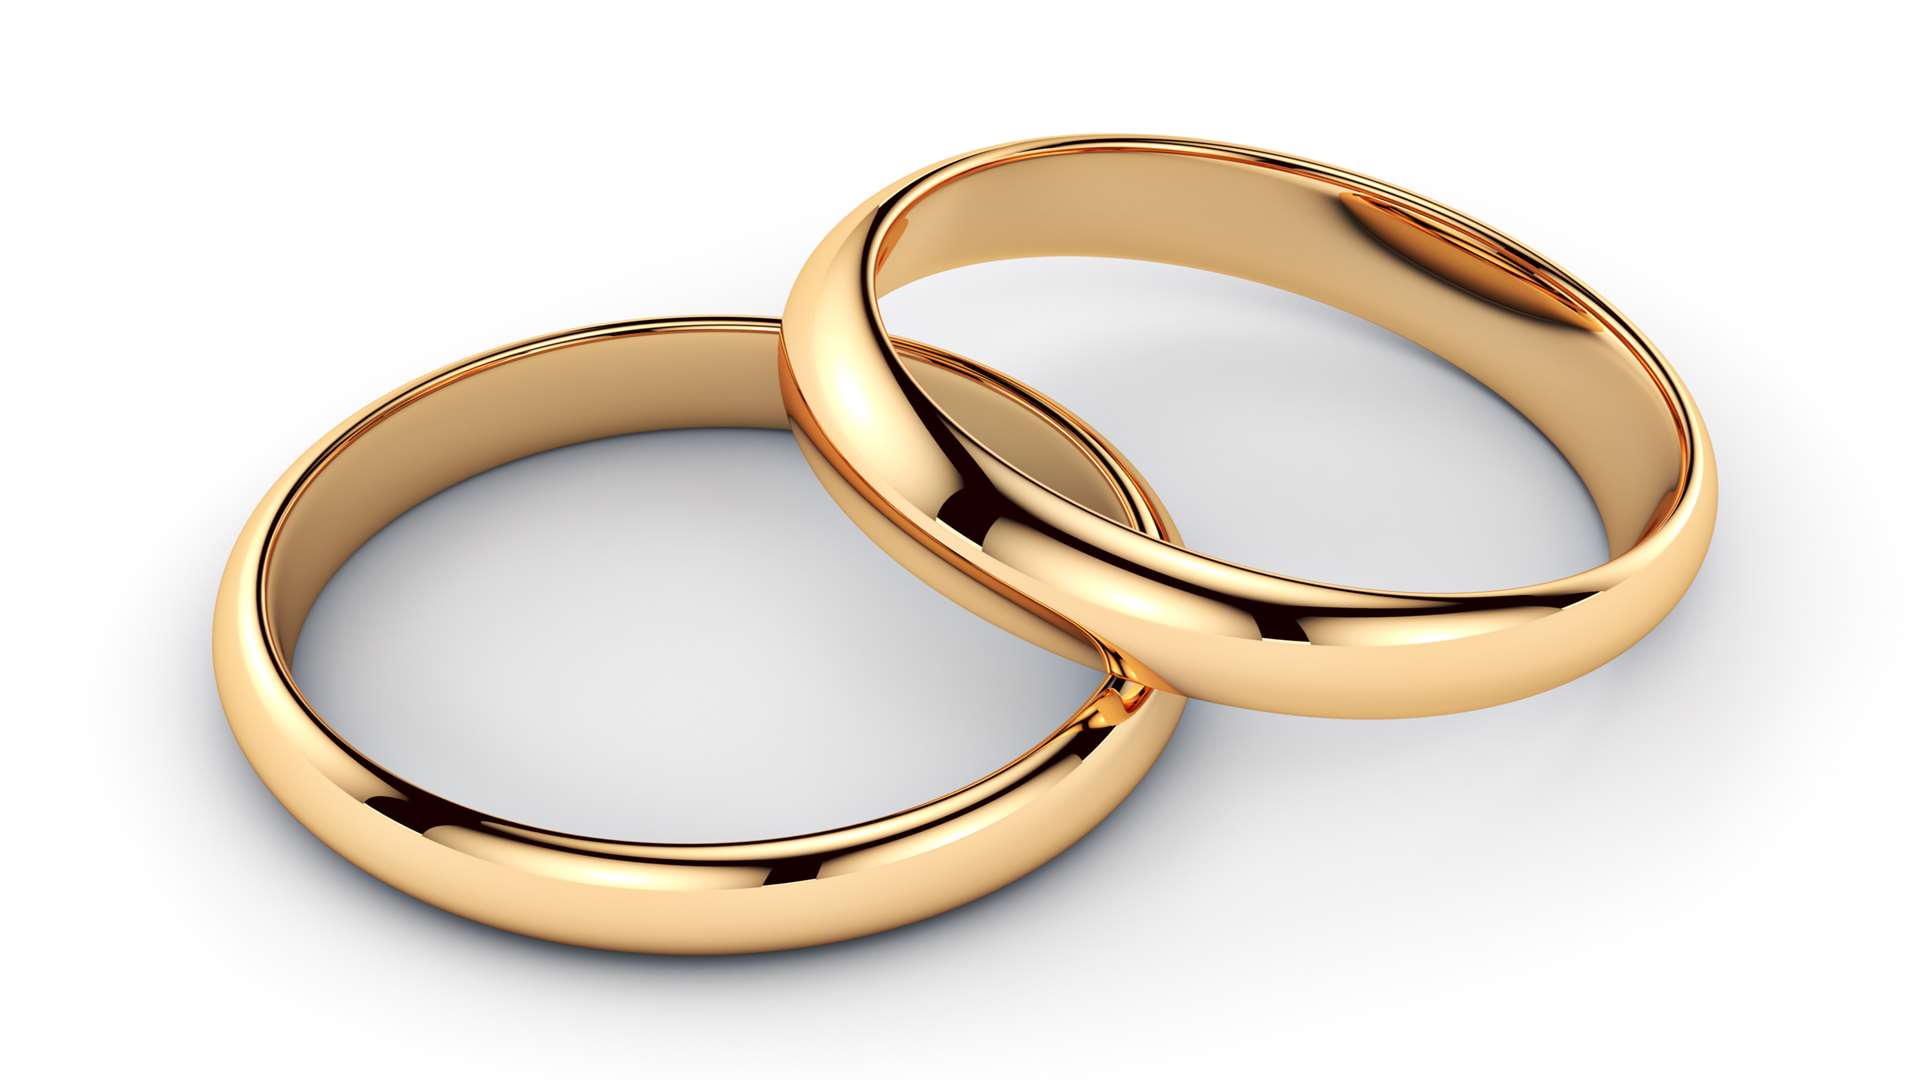 Gary Horn took his estranged wife's rings. Stock image